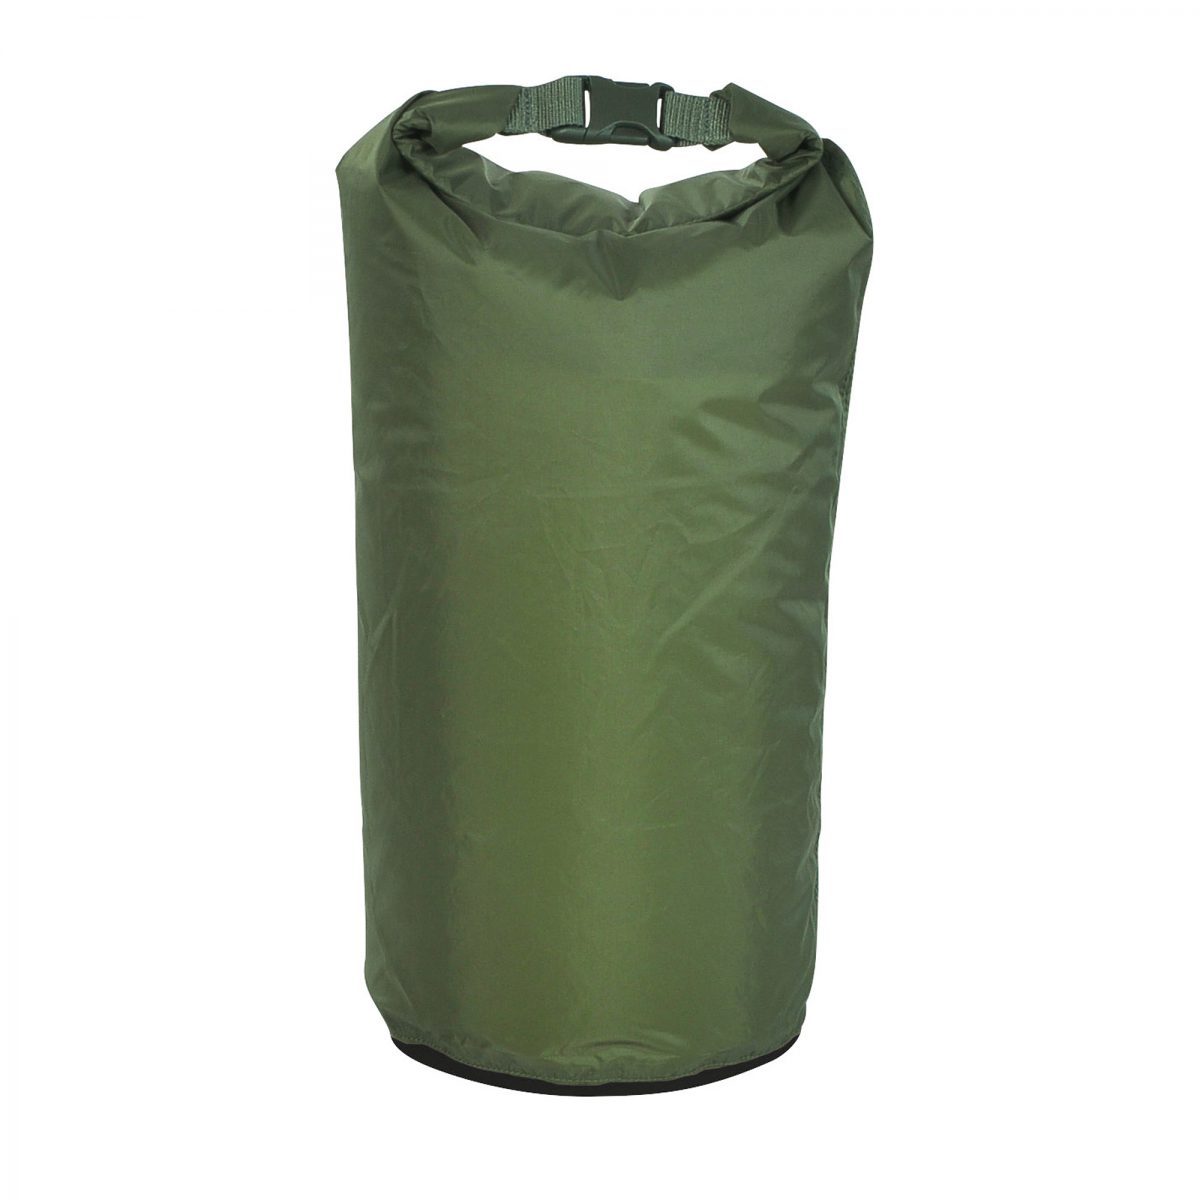 Tasmanian Tiger Waterproof Bag S Stow Bag with Roll-up Closure 10L Tactical Distributors Ltd New Zealand